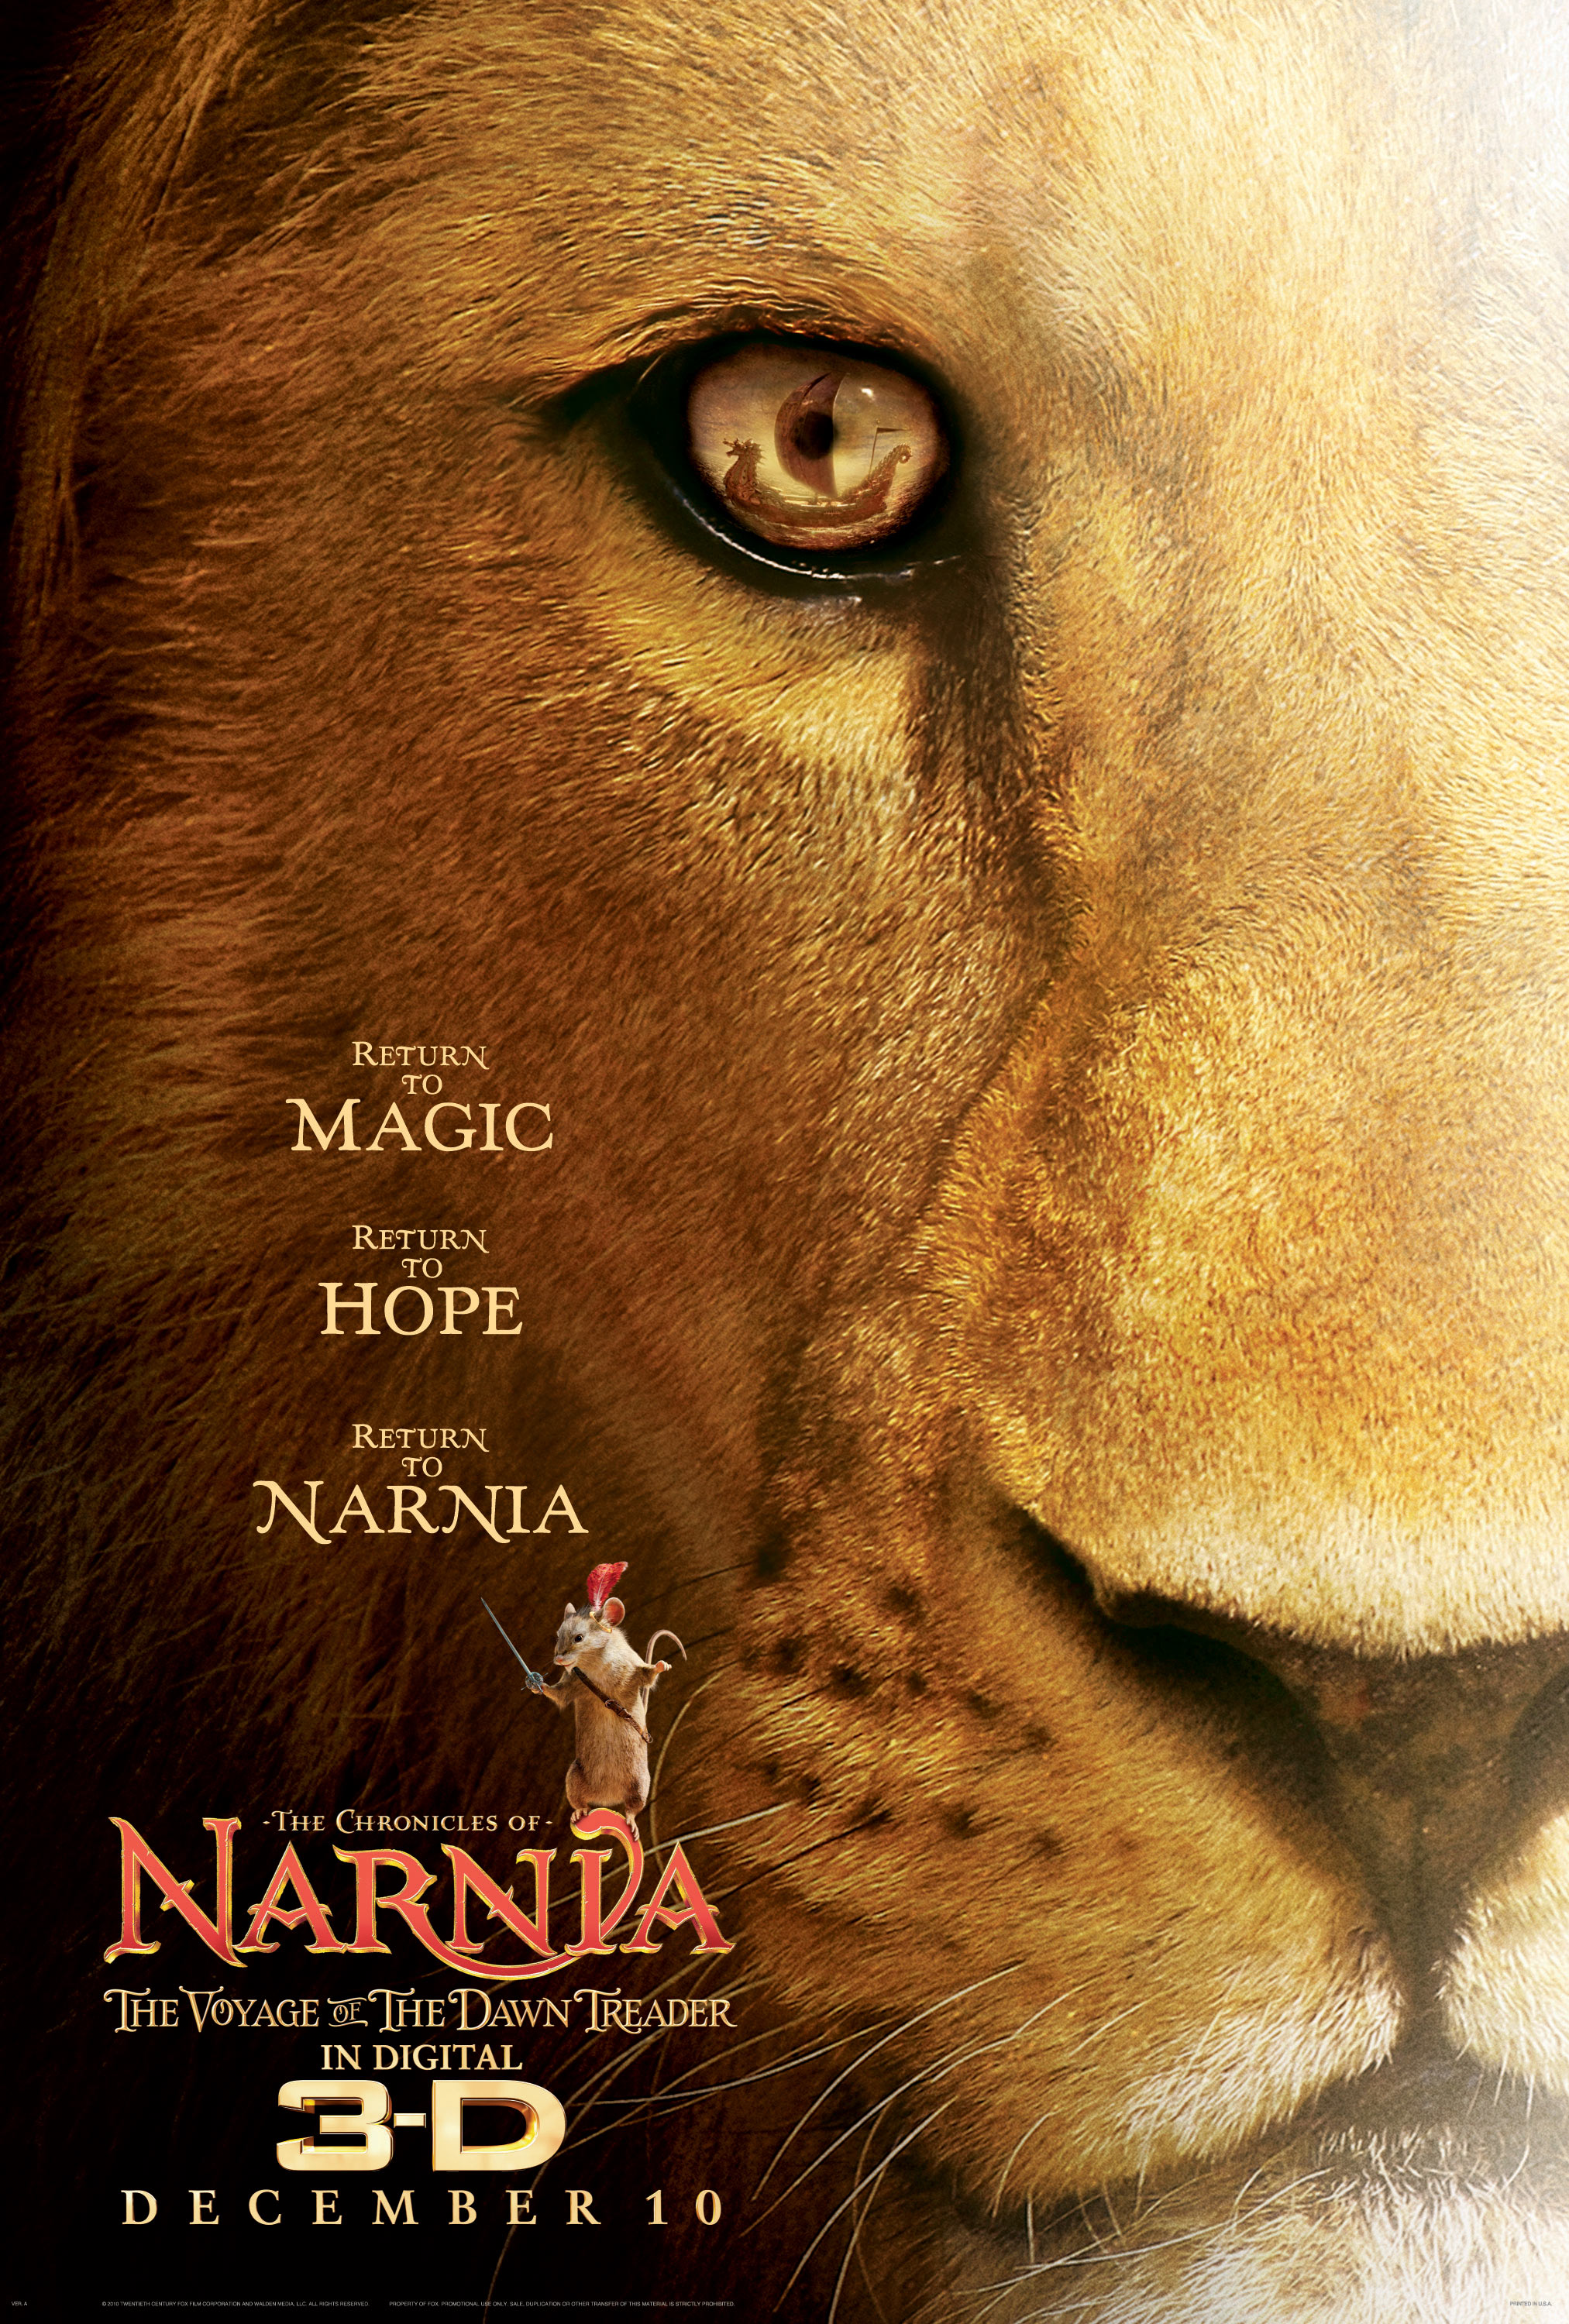 Aslan's Return - The Chronicles of Narnia: Prince Caspian 